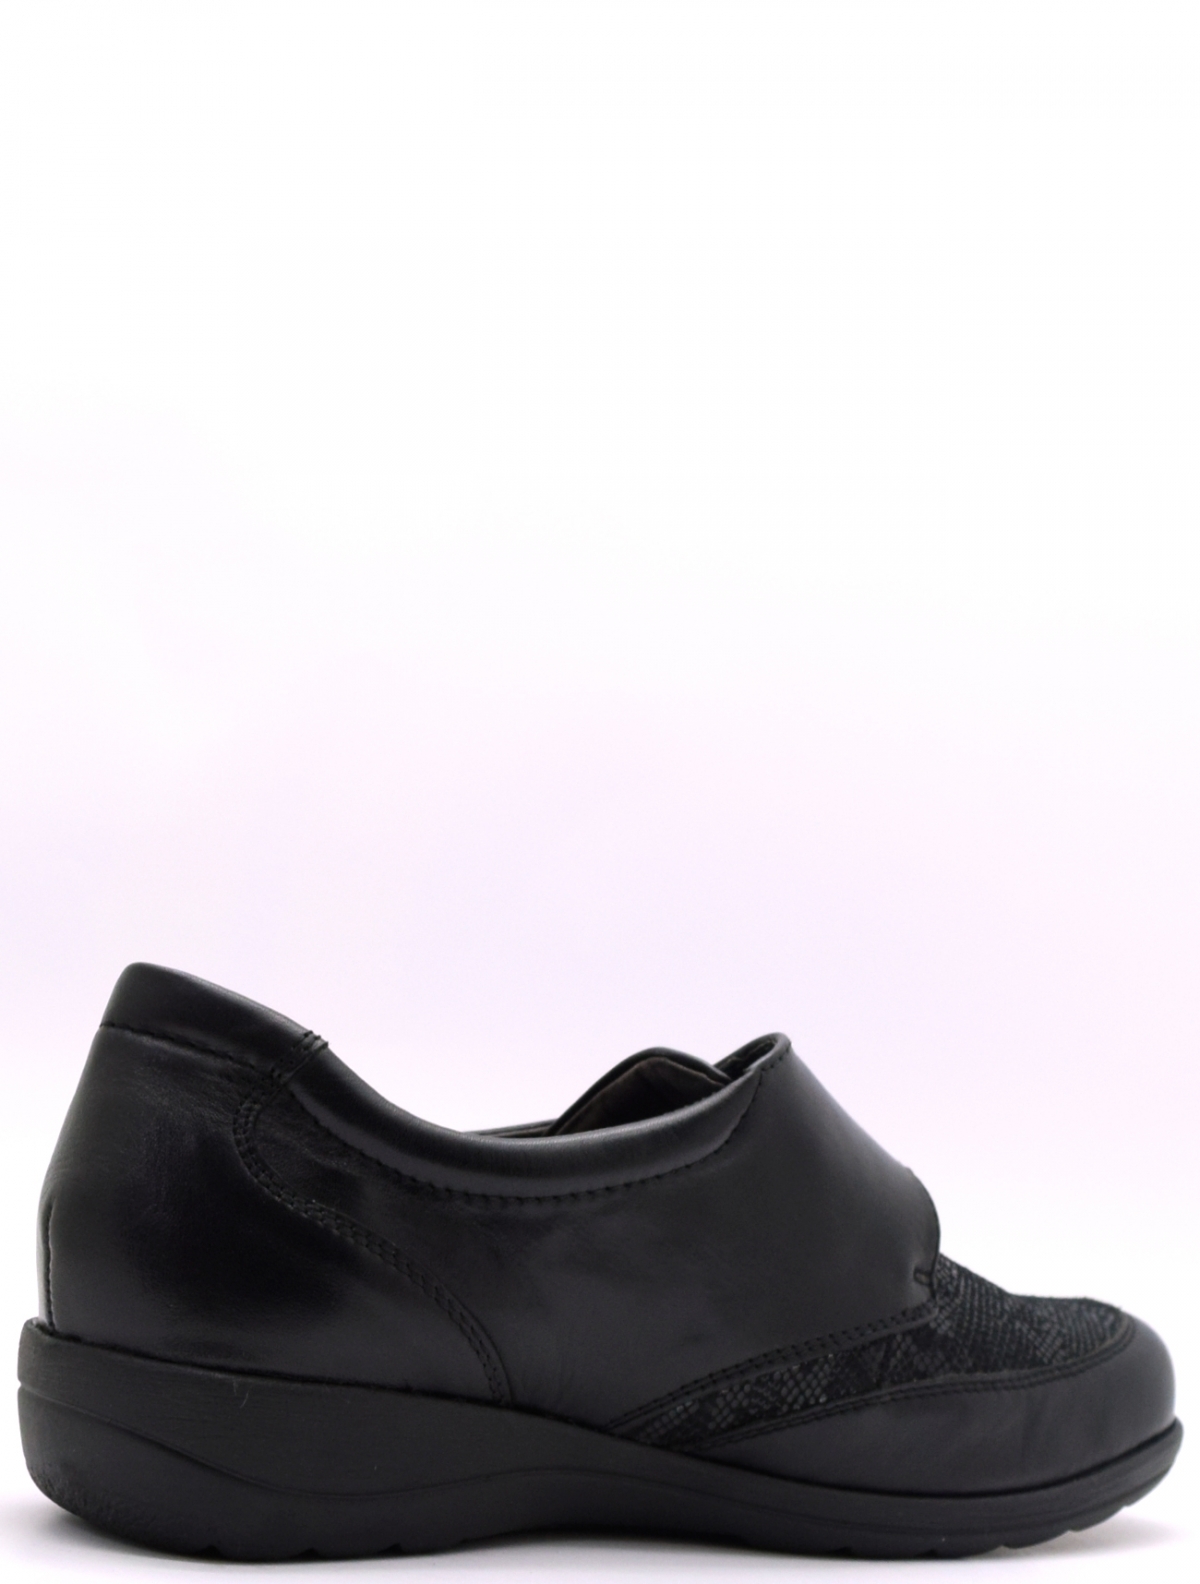 Caprice 9-24653-25-045 женские туфли